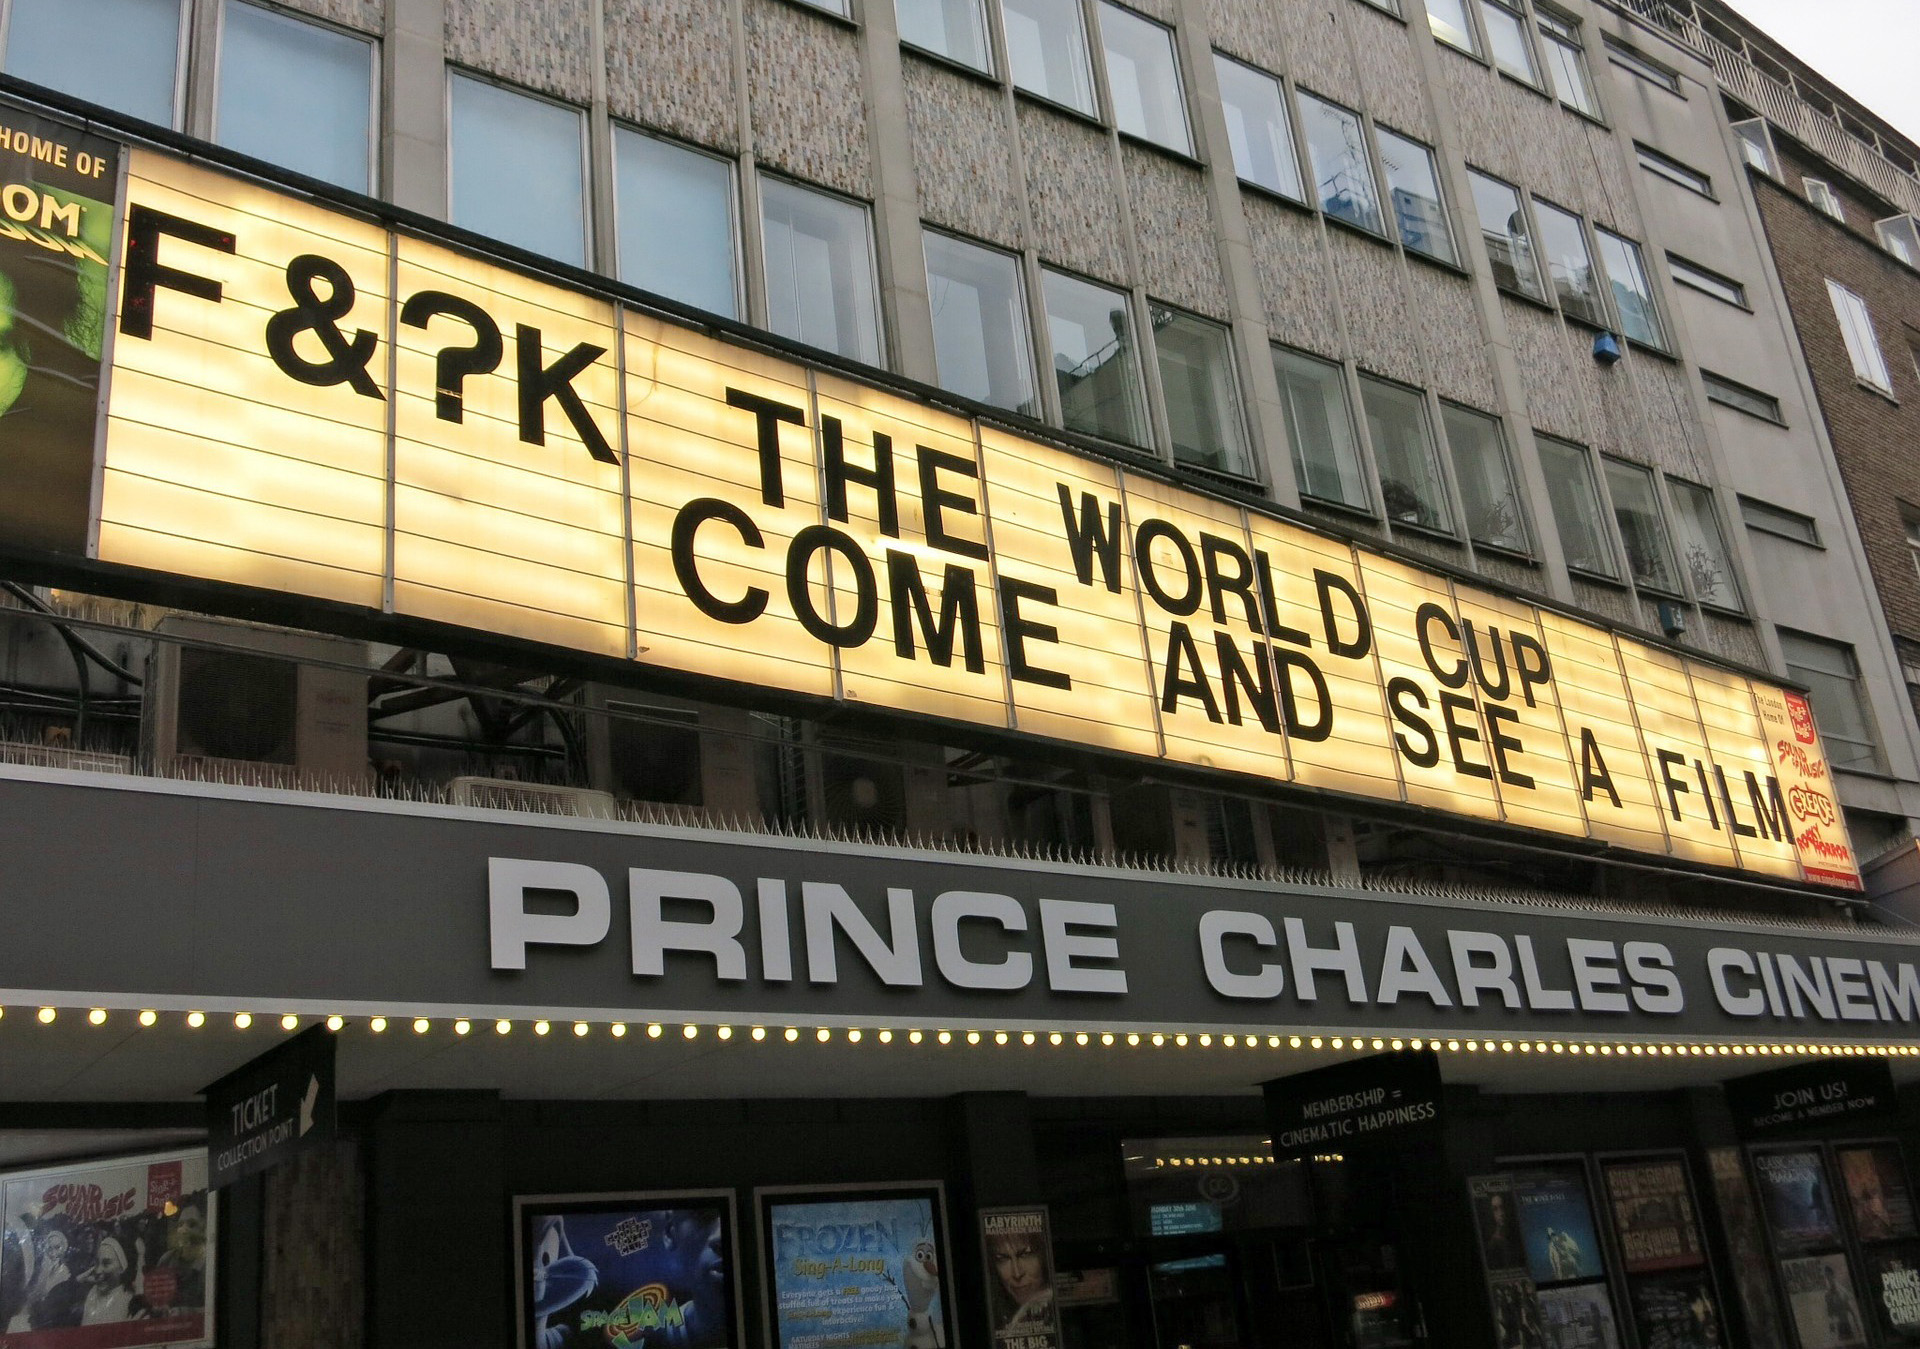 Prince Charles Cinema - one of London's best independent cinemas